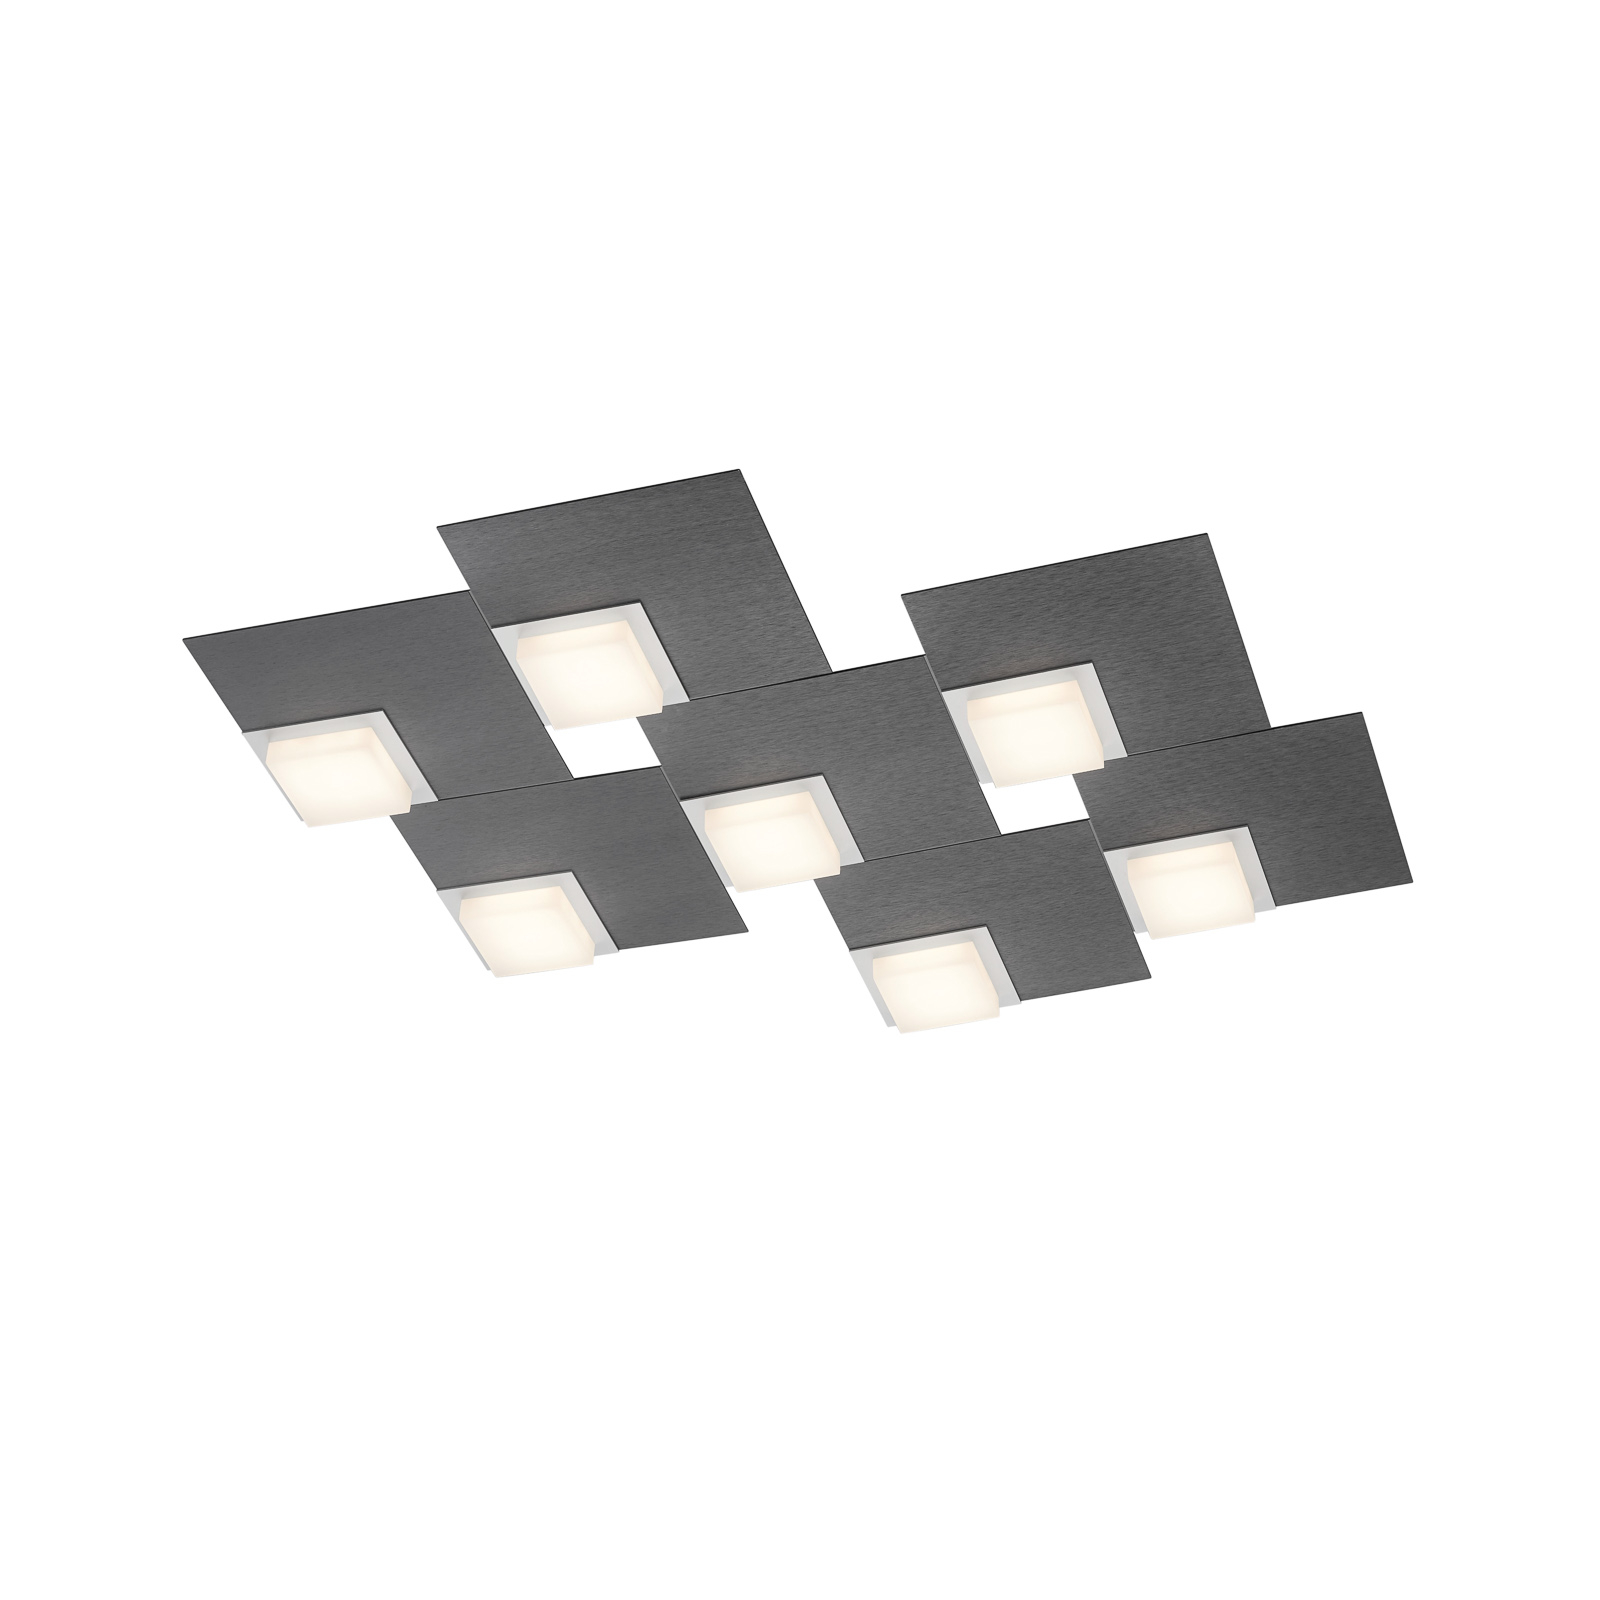 BANKAMP Quadro LED ceiling light 64 W anthracite